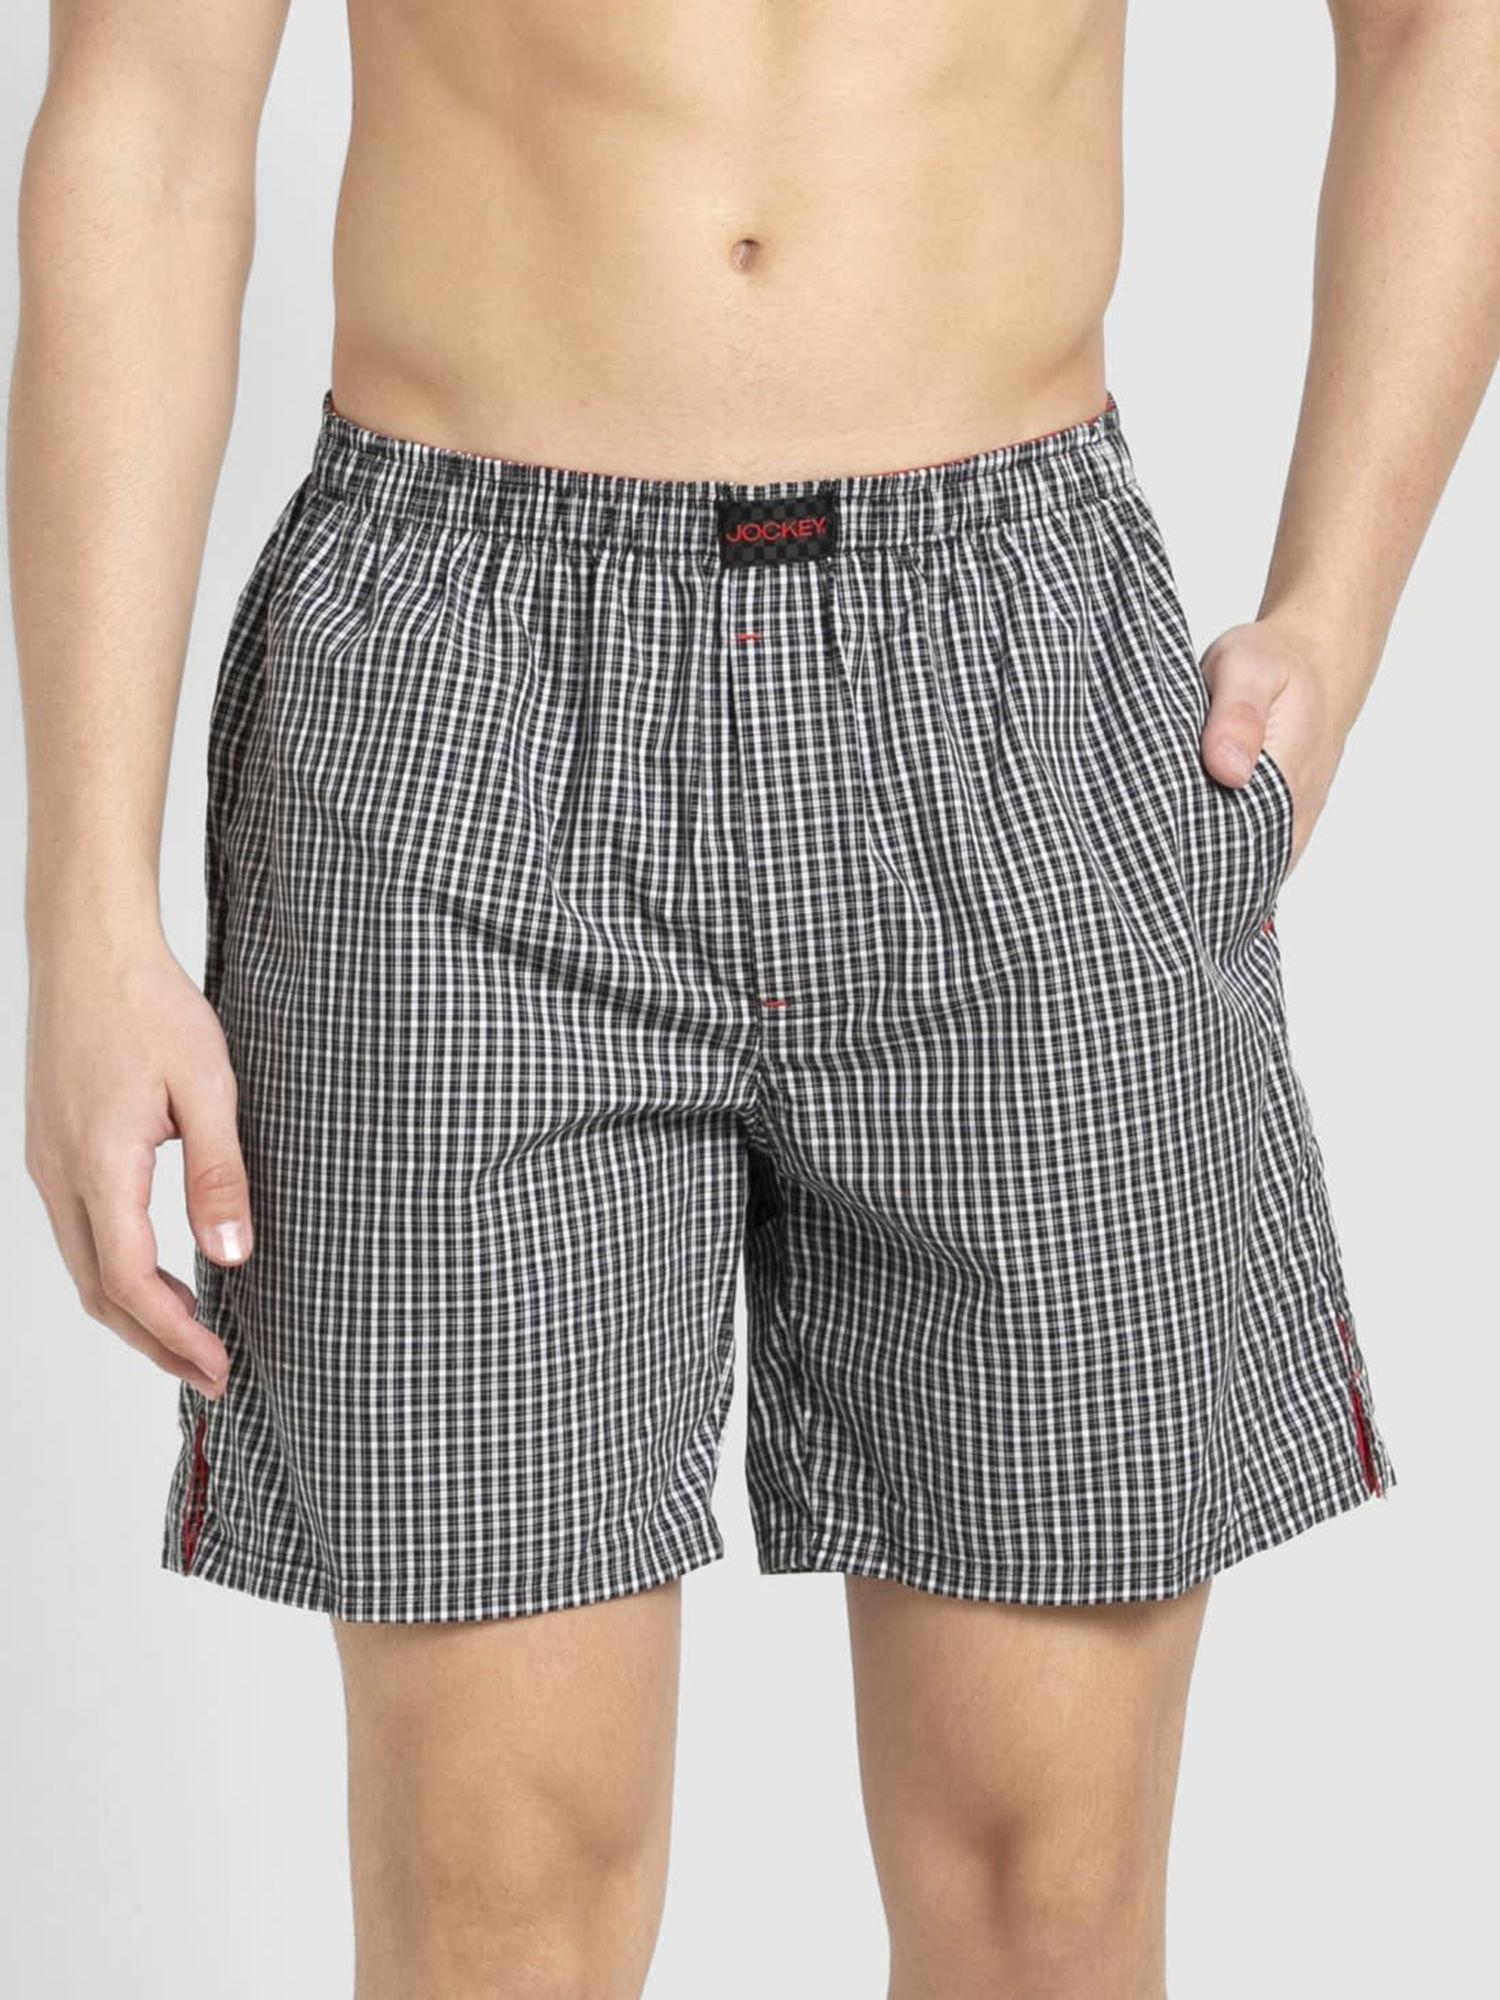 assorted checks boxer shorts